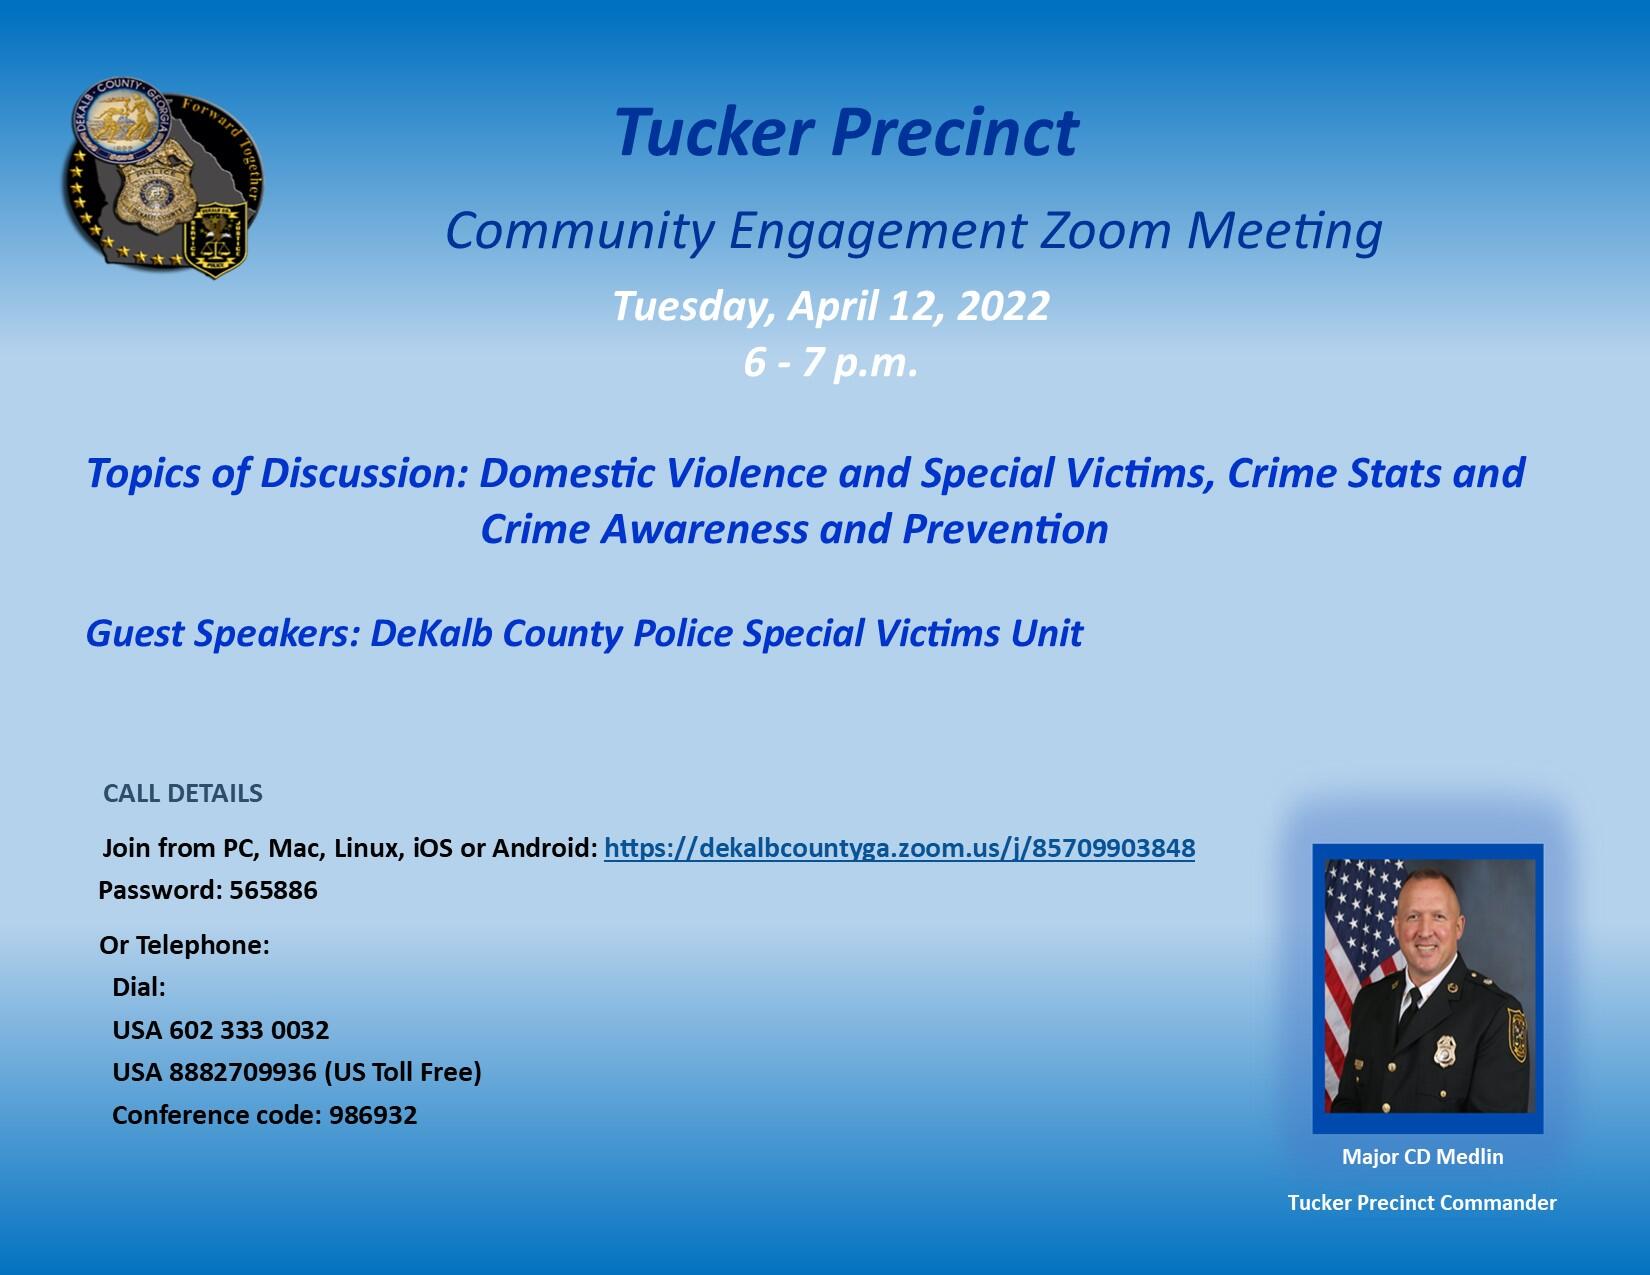 April Community Engagement Zoom Meeting (DeKalb County Police